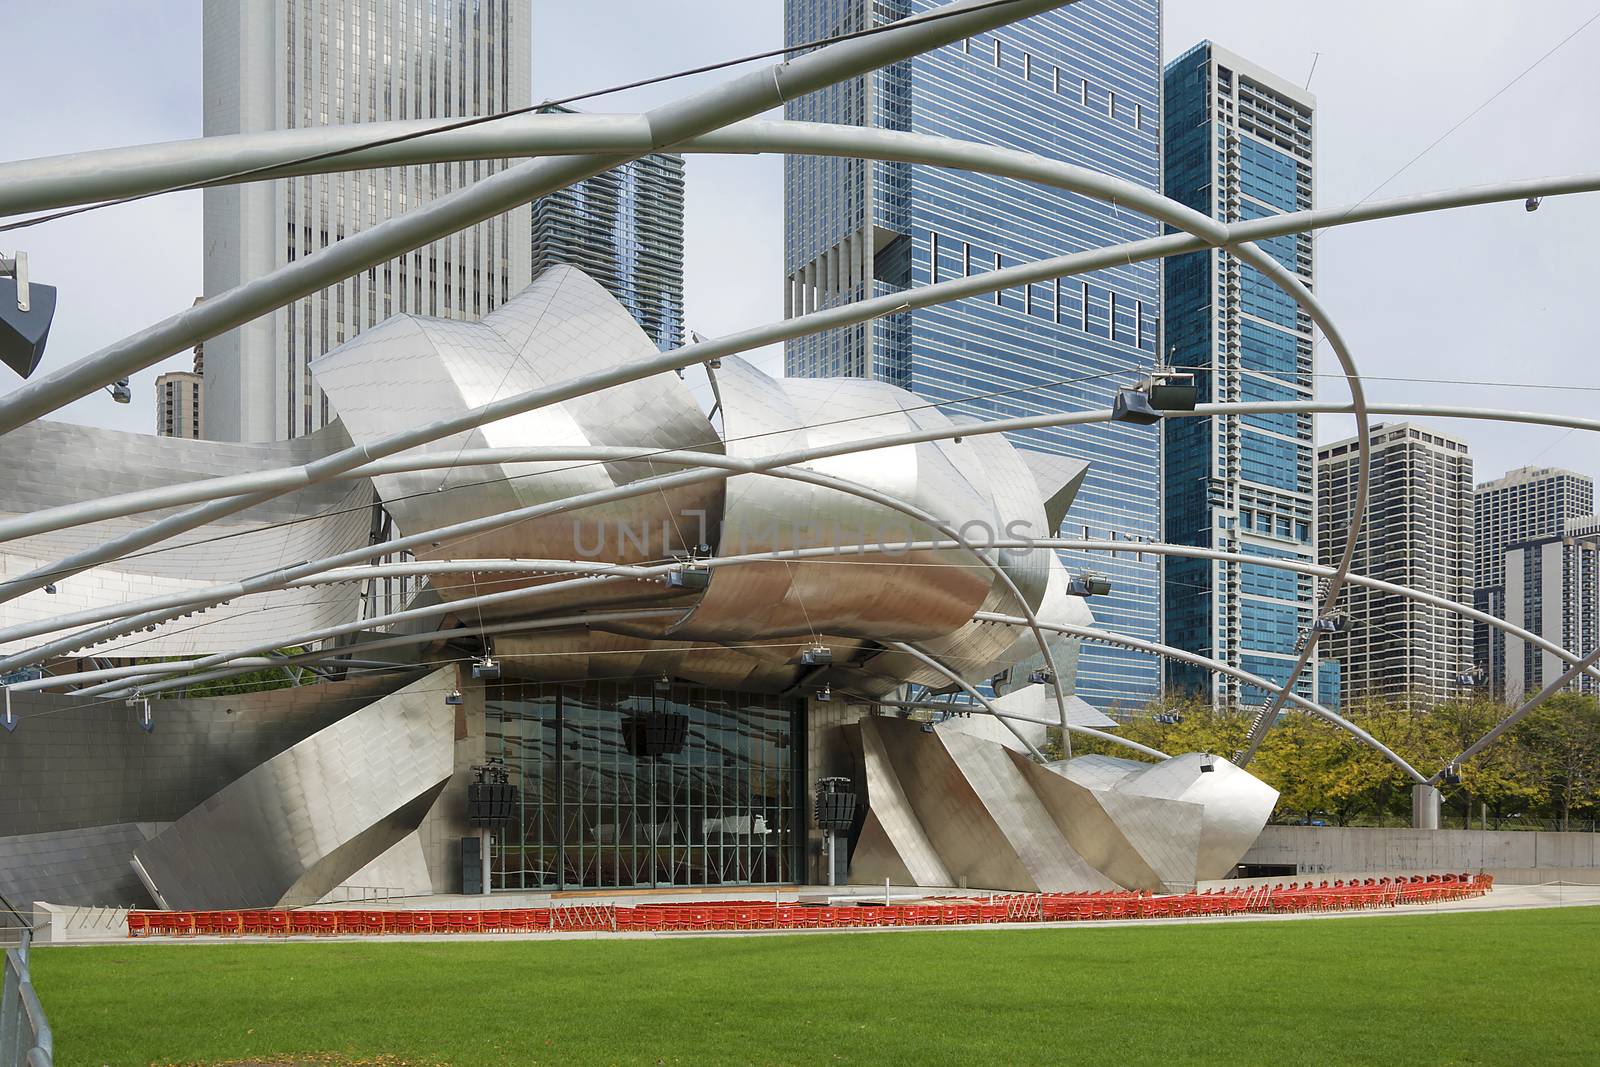 Jay Pritzker Pavilion in Chicago by rarrarorro